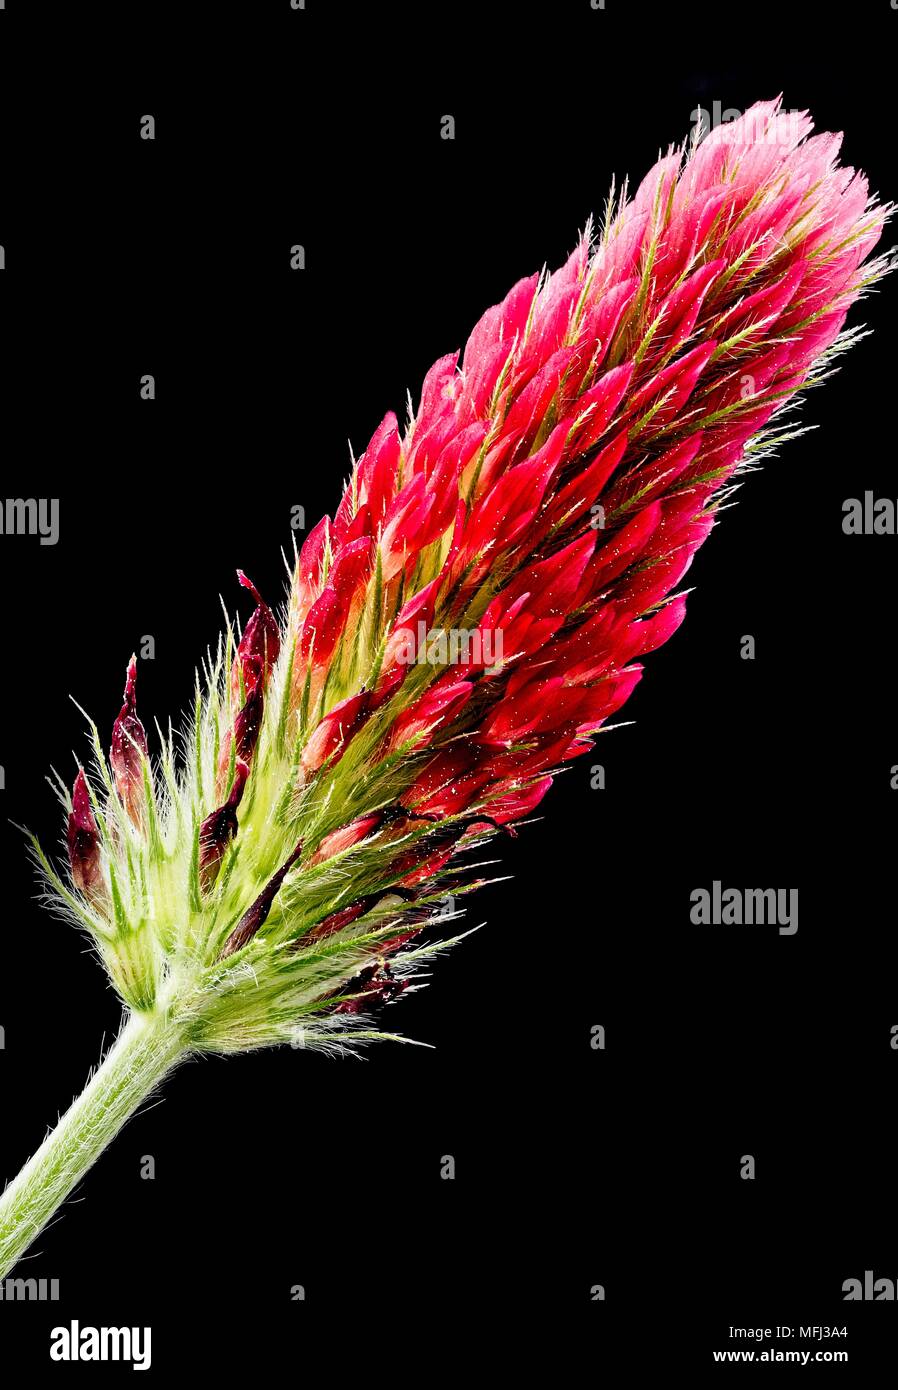 Houston TX USA - 02/27/2018  -  TX Red Wild Flower photo stacked using 35 images Stock Photo